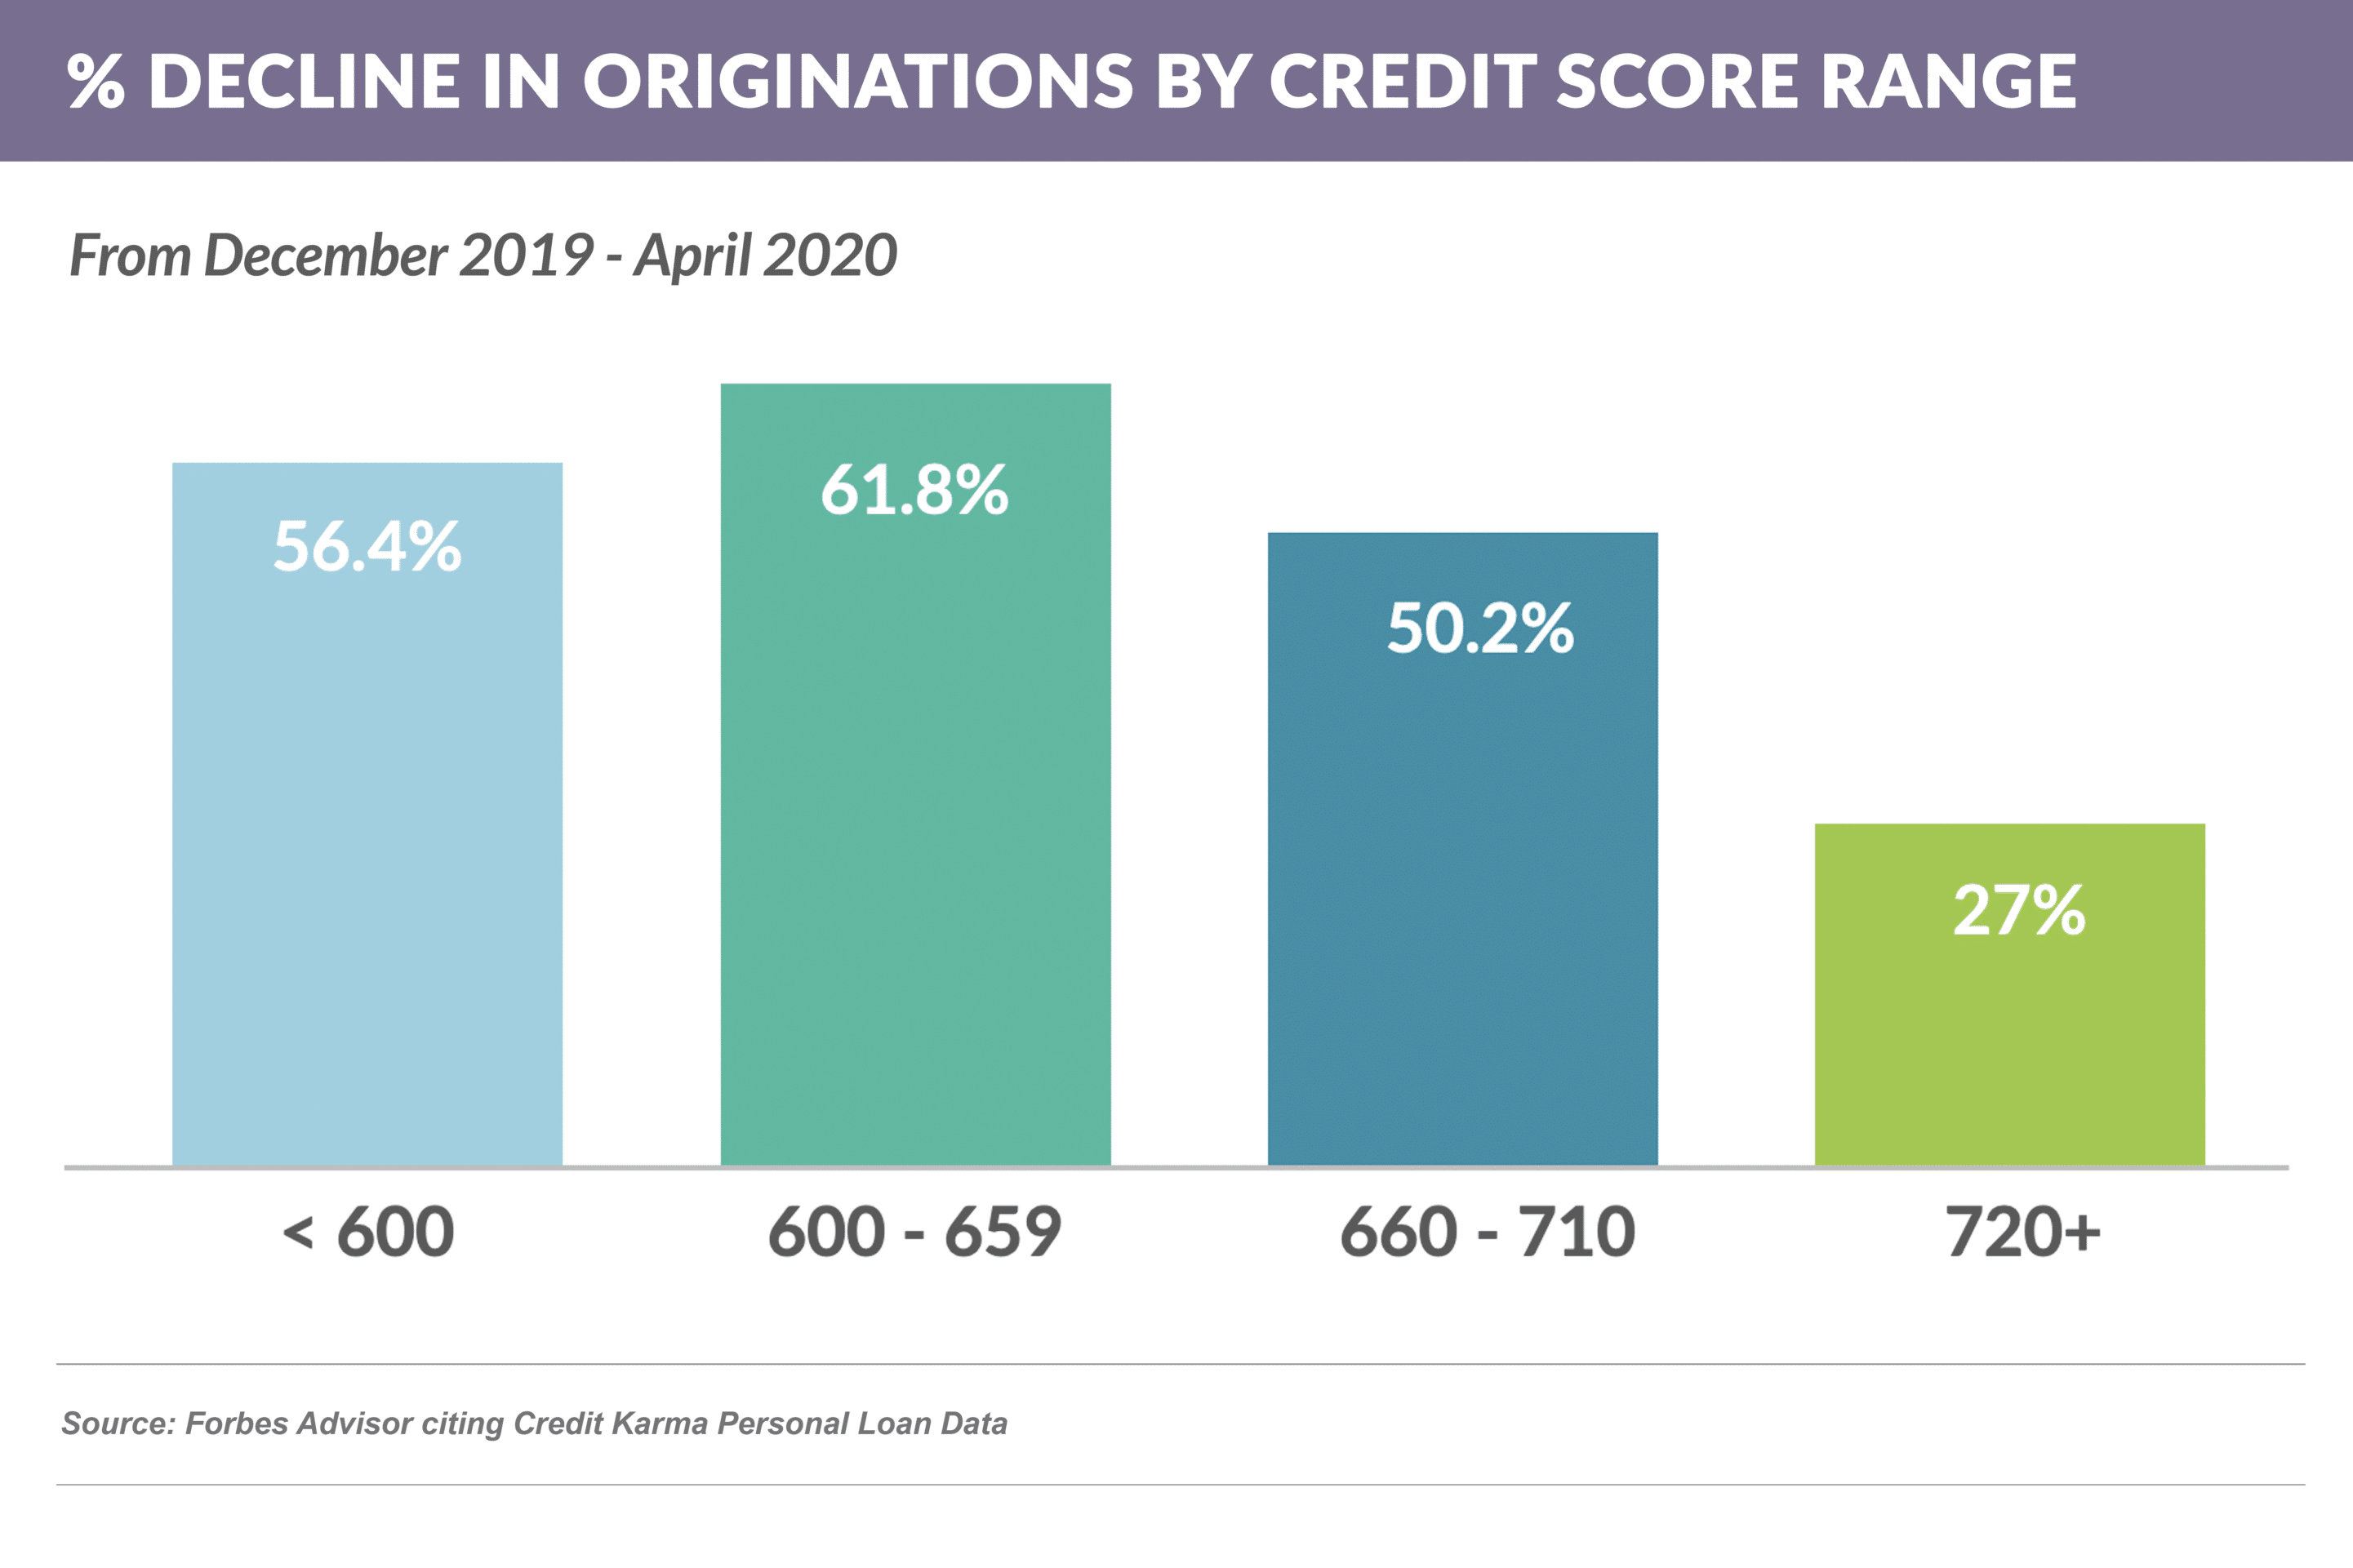 % Decline in Originations By Credit Score Range